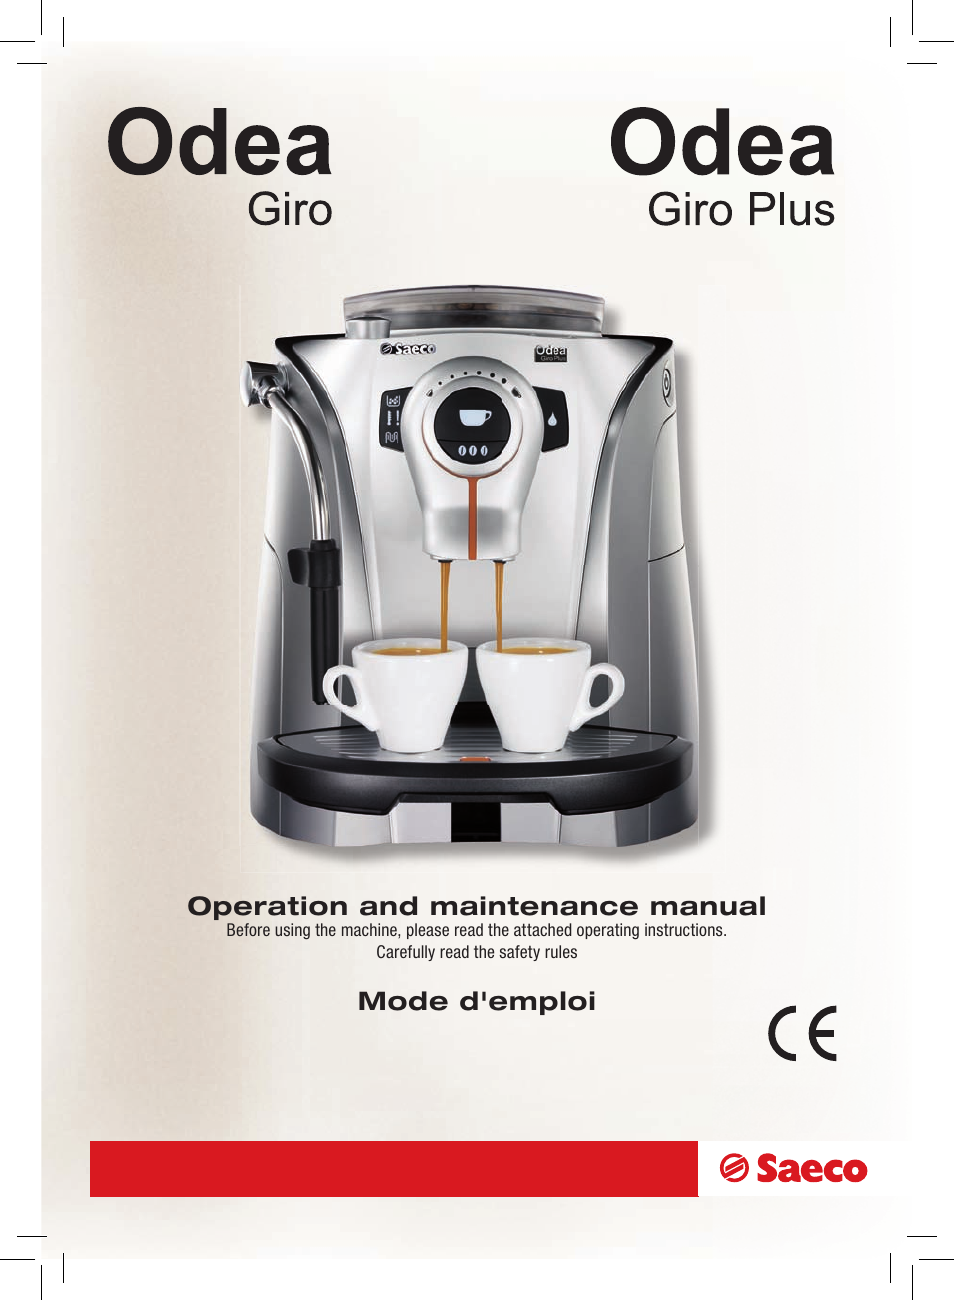 Philips Saeco Giro Manual | 22 pages | for: Odea Giro Plus